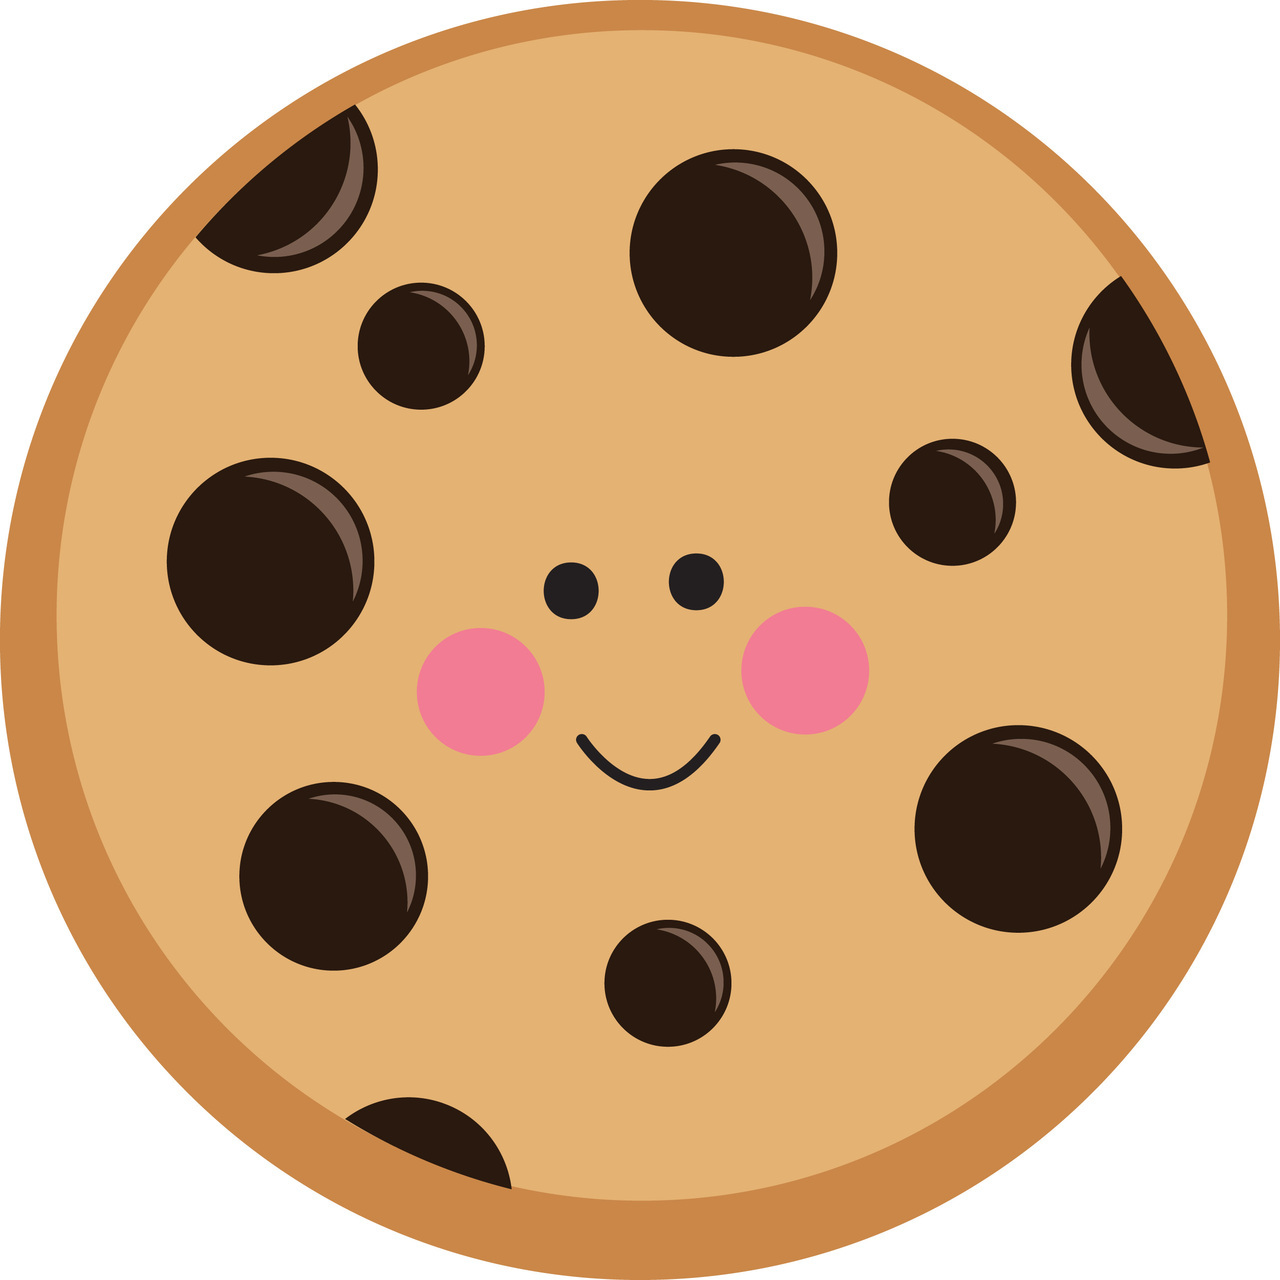 Cookie images clip art